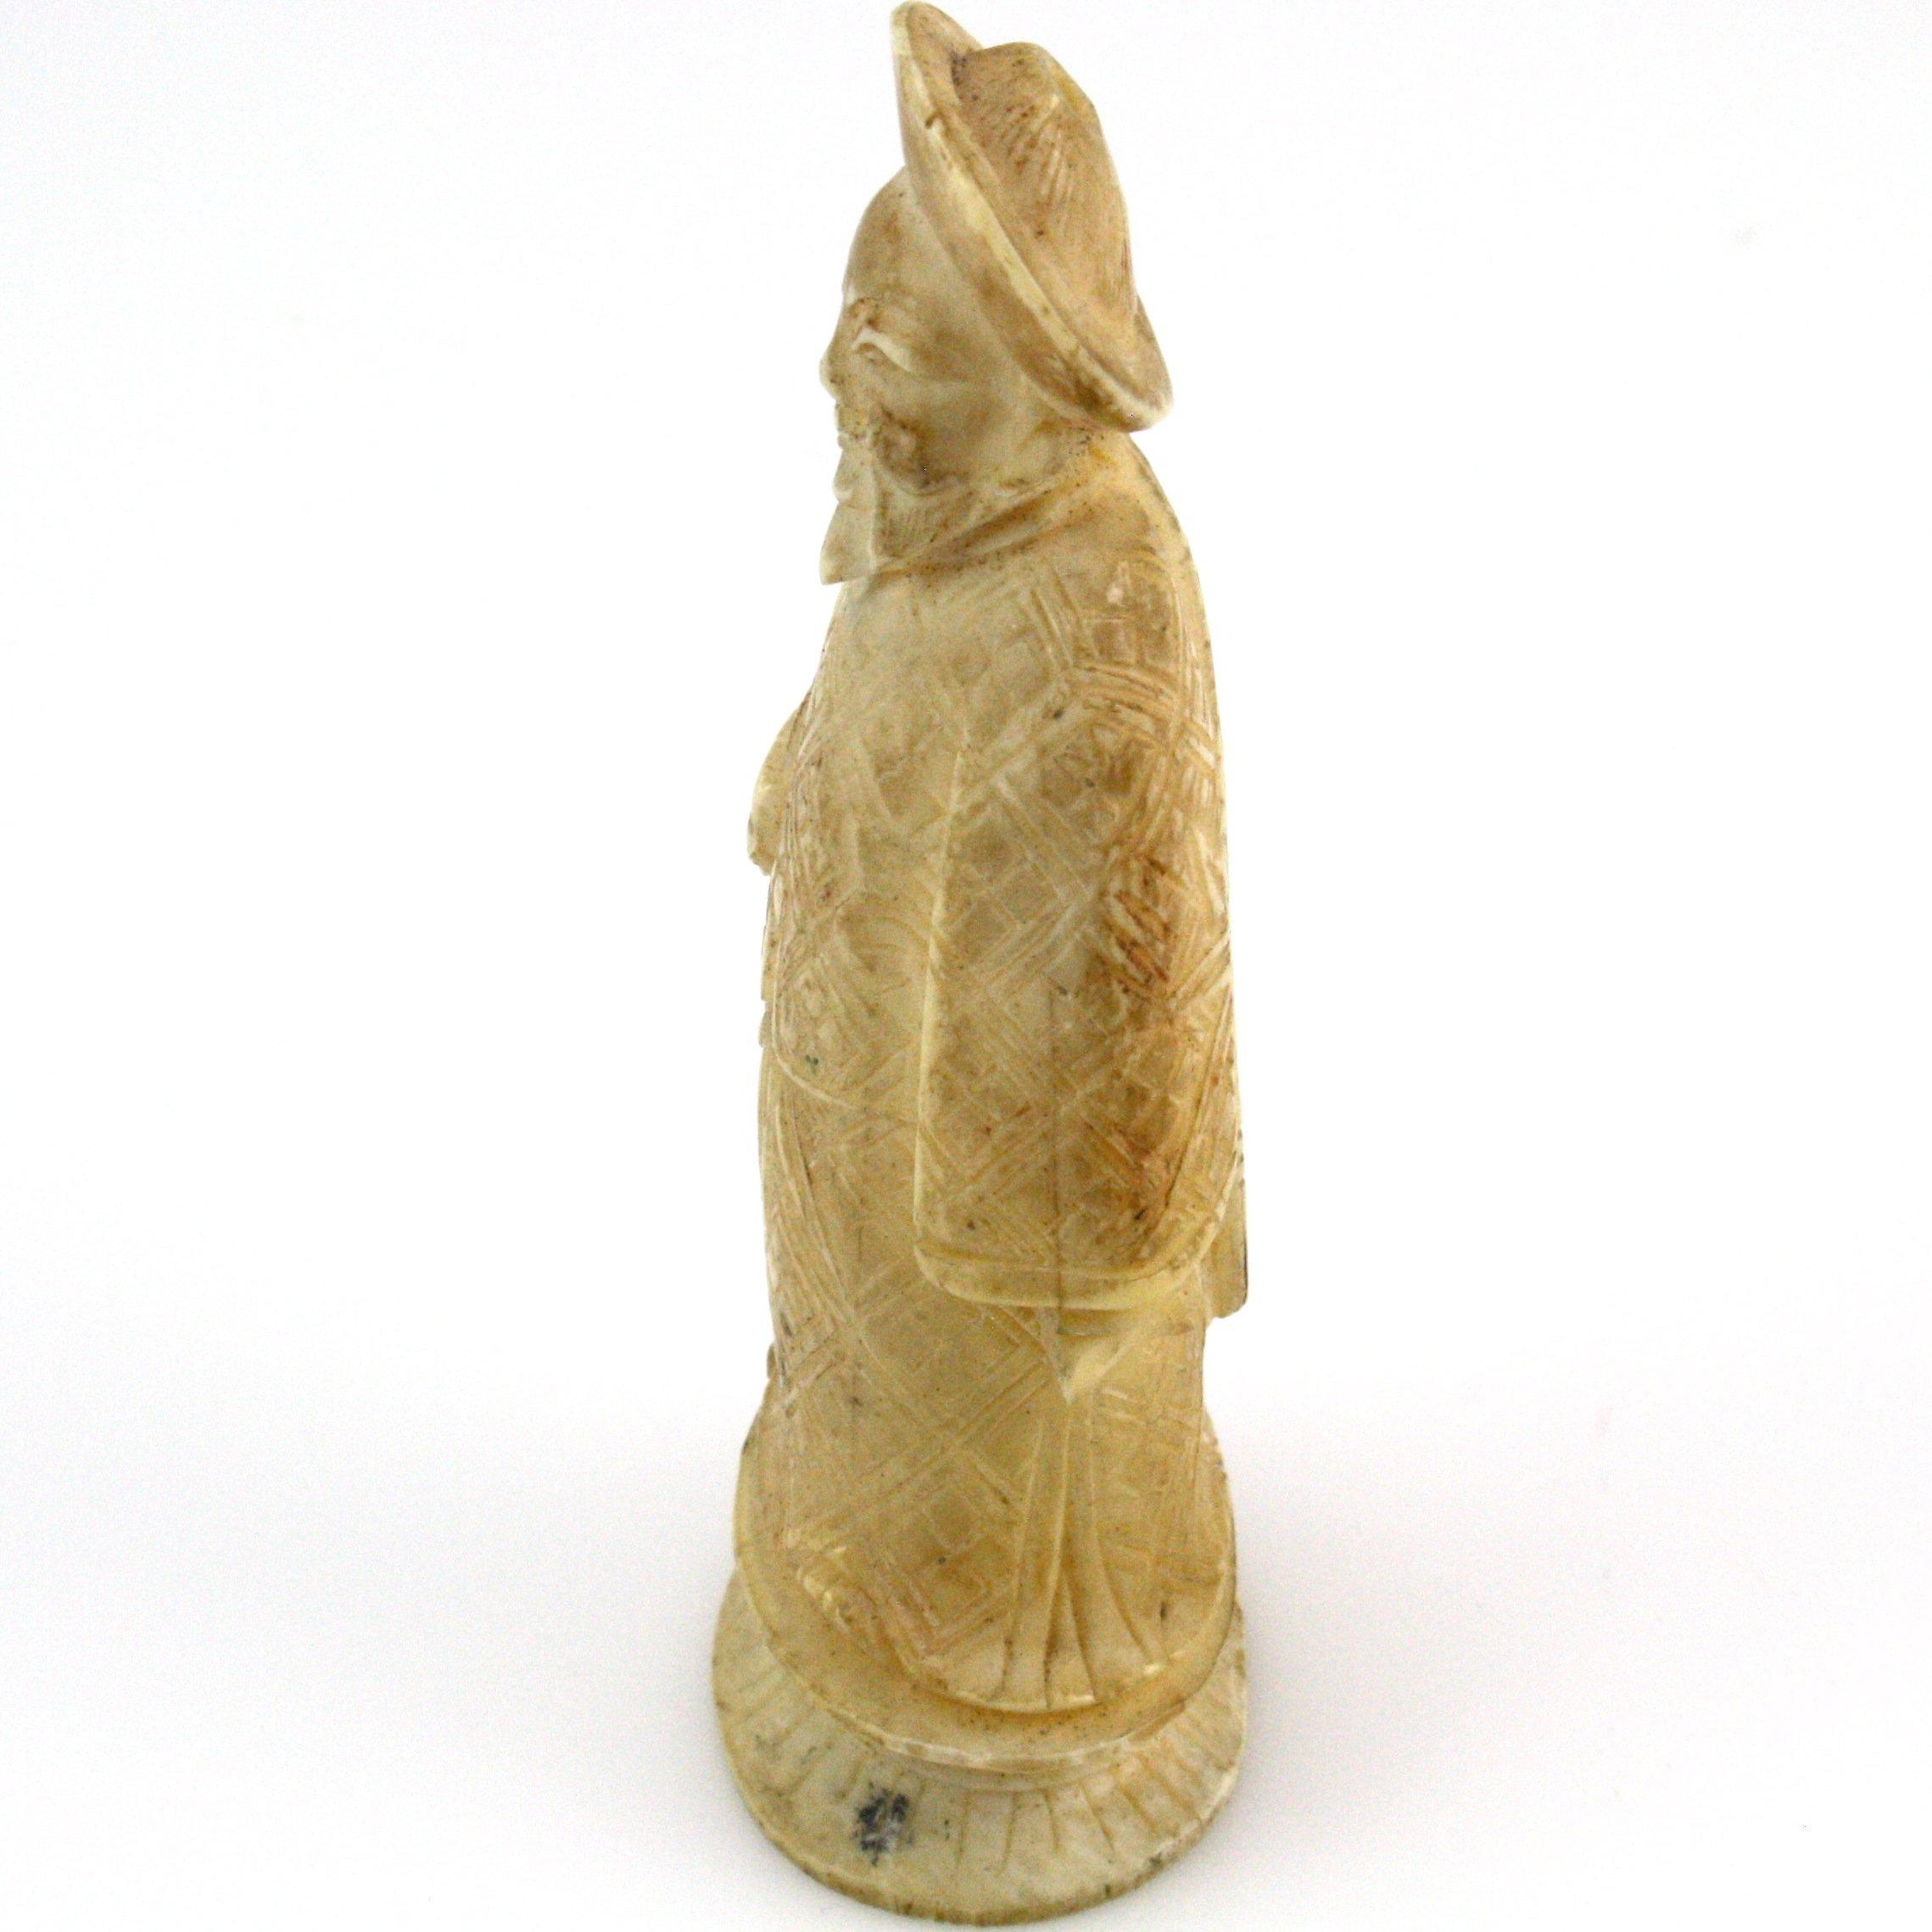 Vintage genuine hand-carved ivory Chinese man figurine